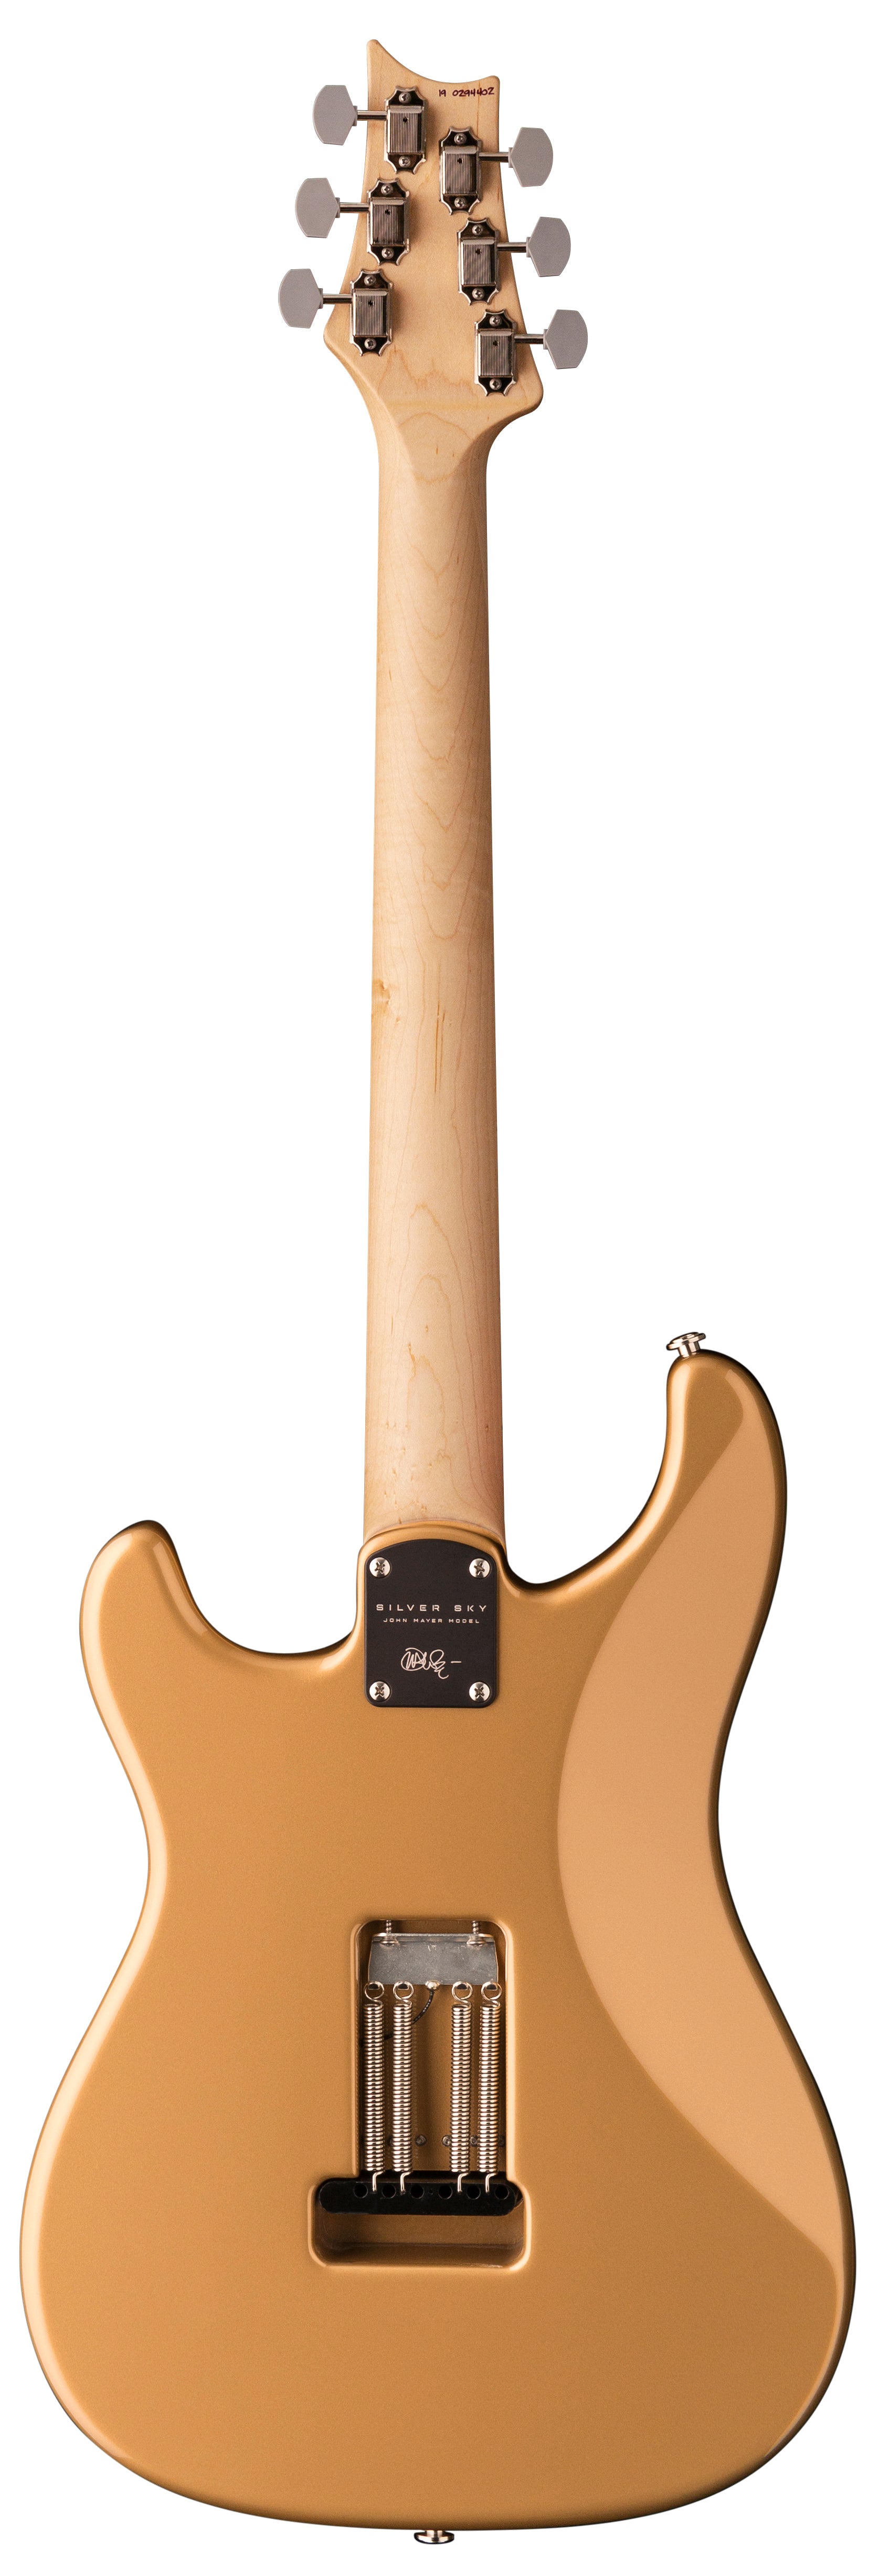 PRS Bolt-On Signature Silver Sky Series Electric Guitar - Maple Fretboard (Golden Mesa)